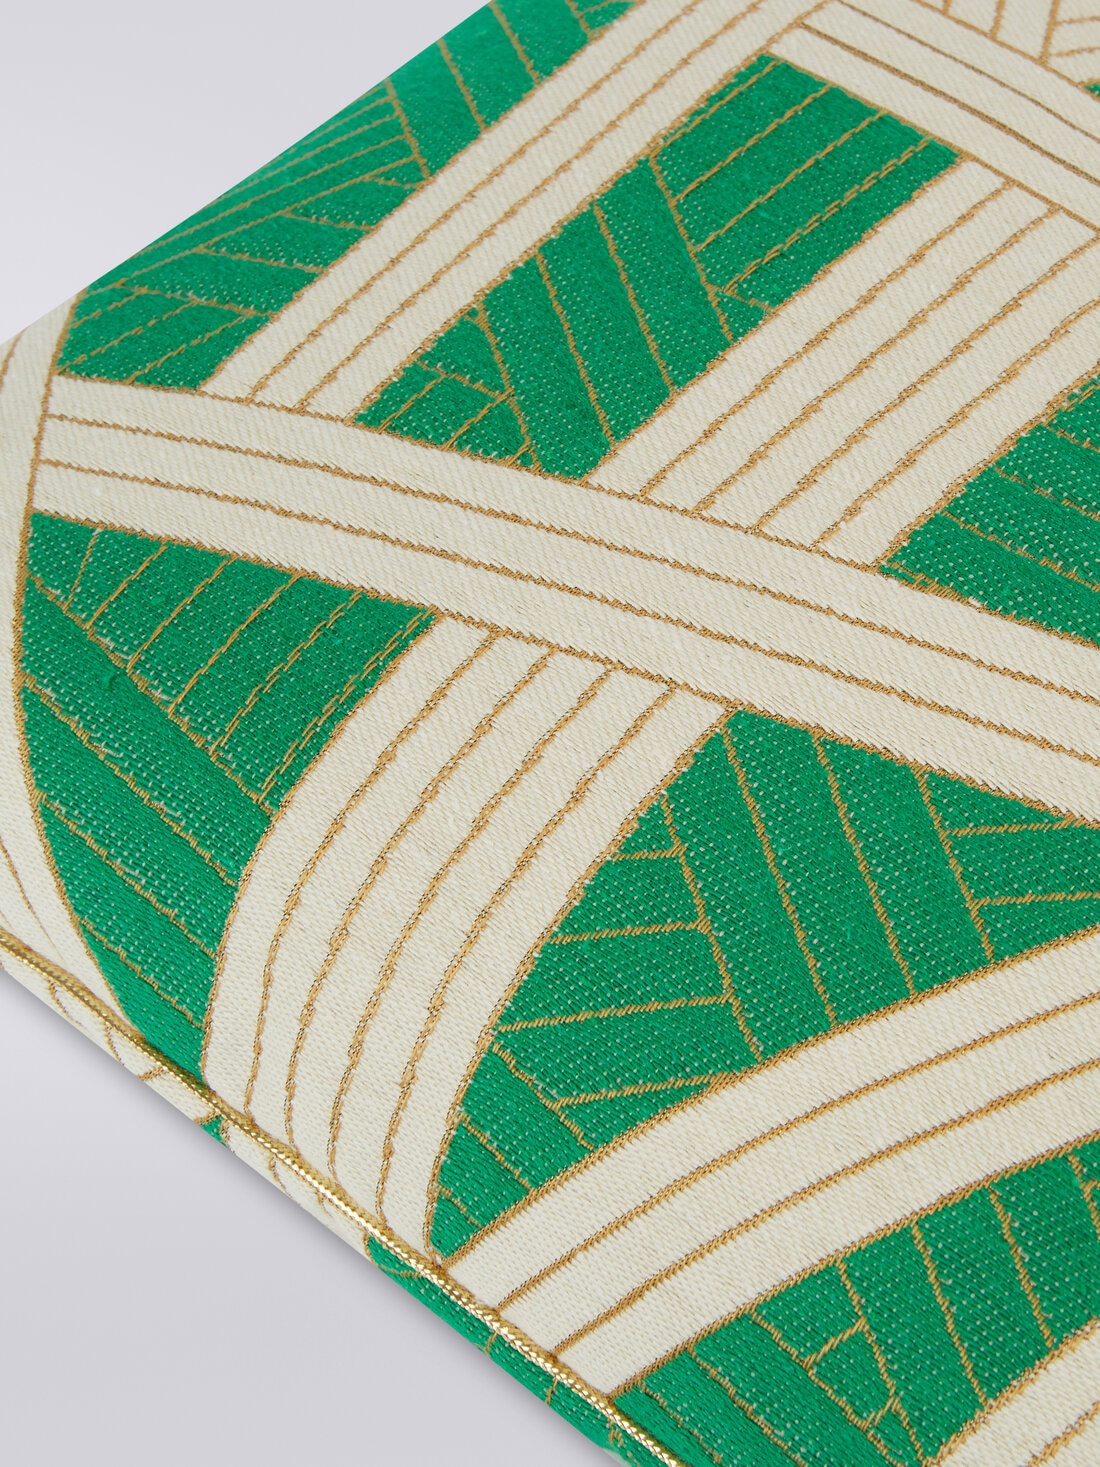 Nastri 30x60 cm cushion with stitching, Multicoloured  - 8051575830808 - 2